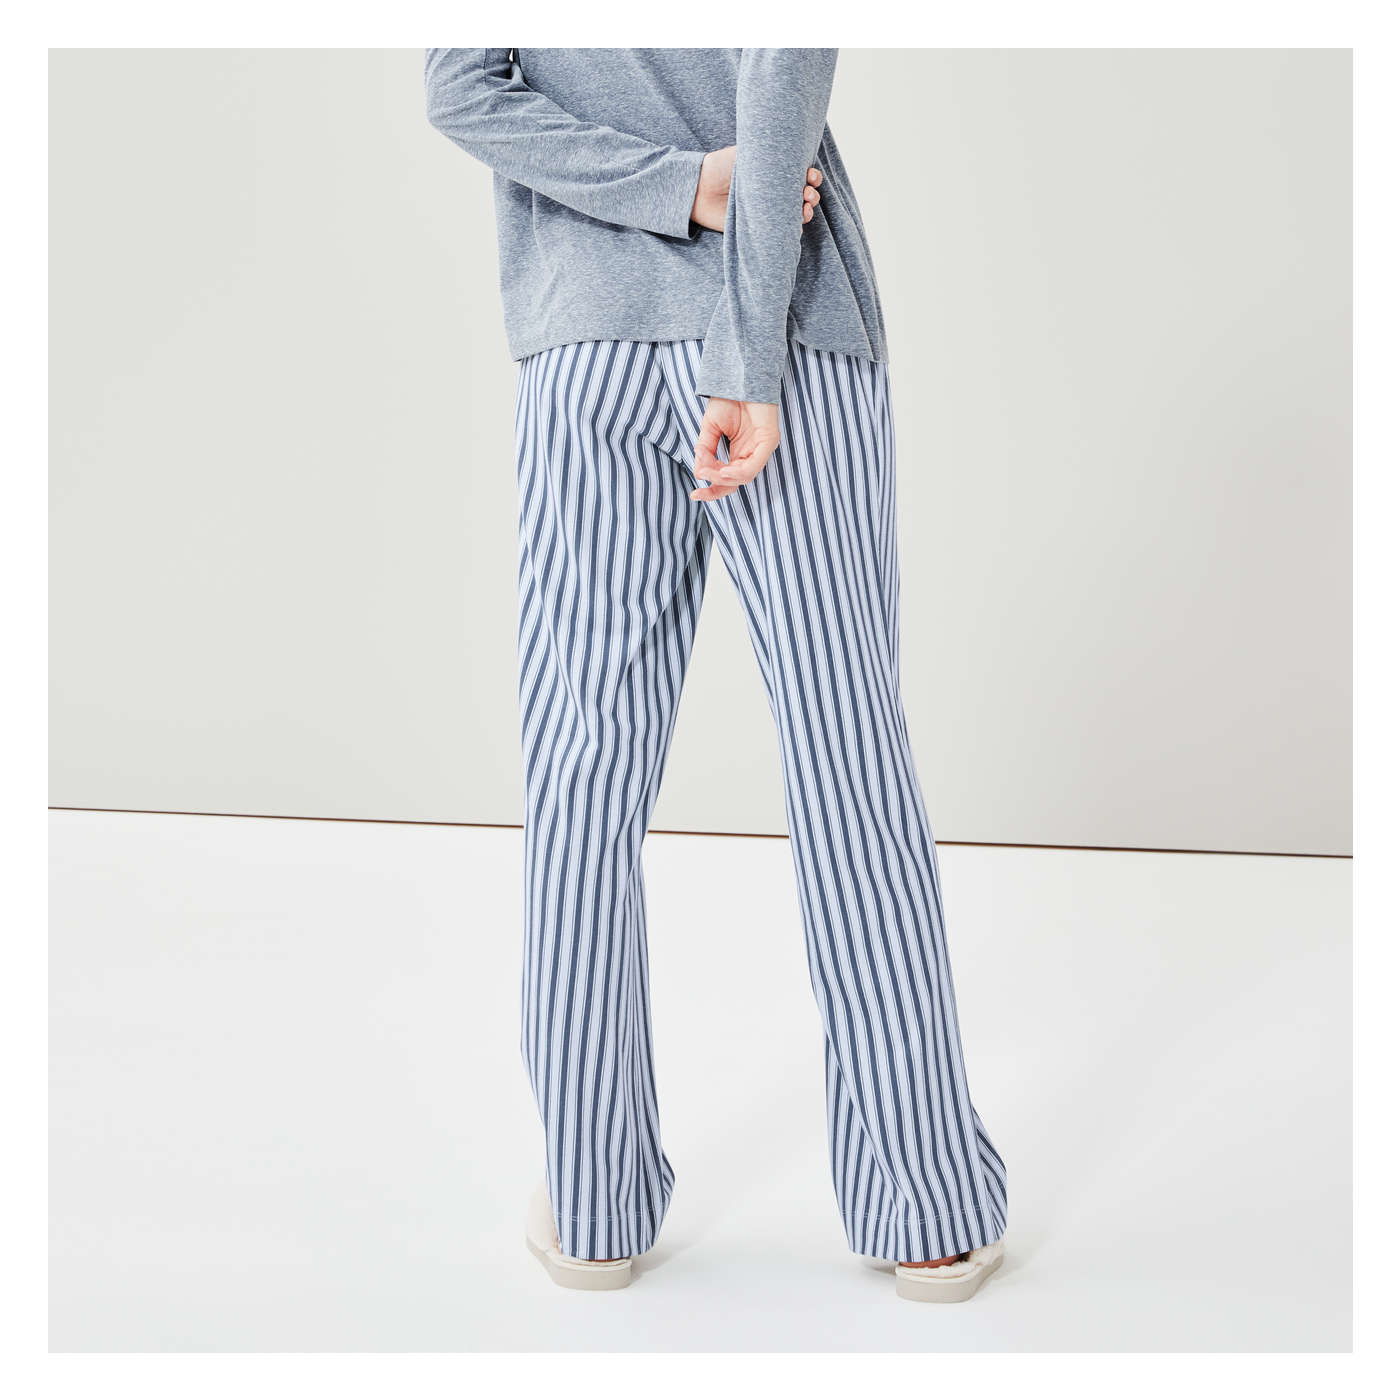 Pajama Pant in Light Blue from Joe Fresh